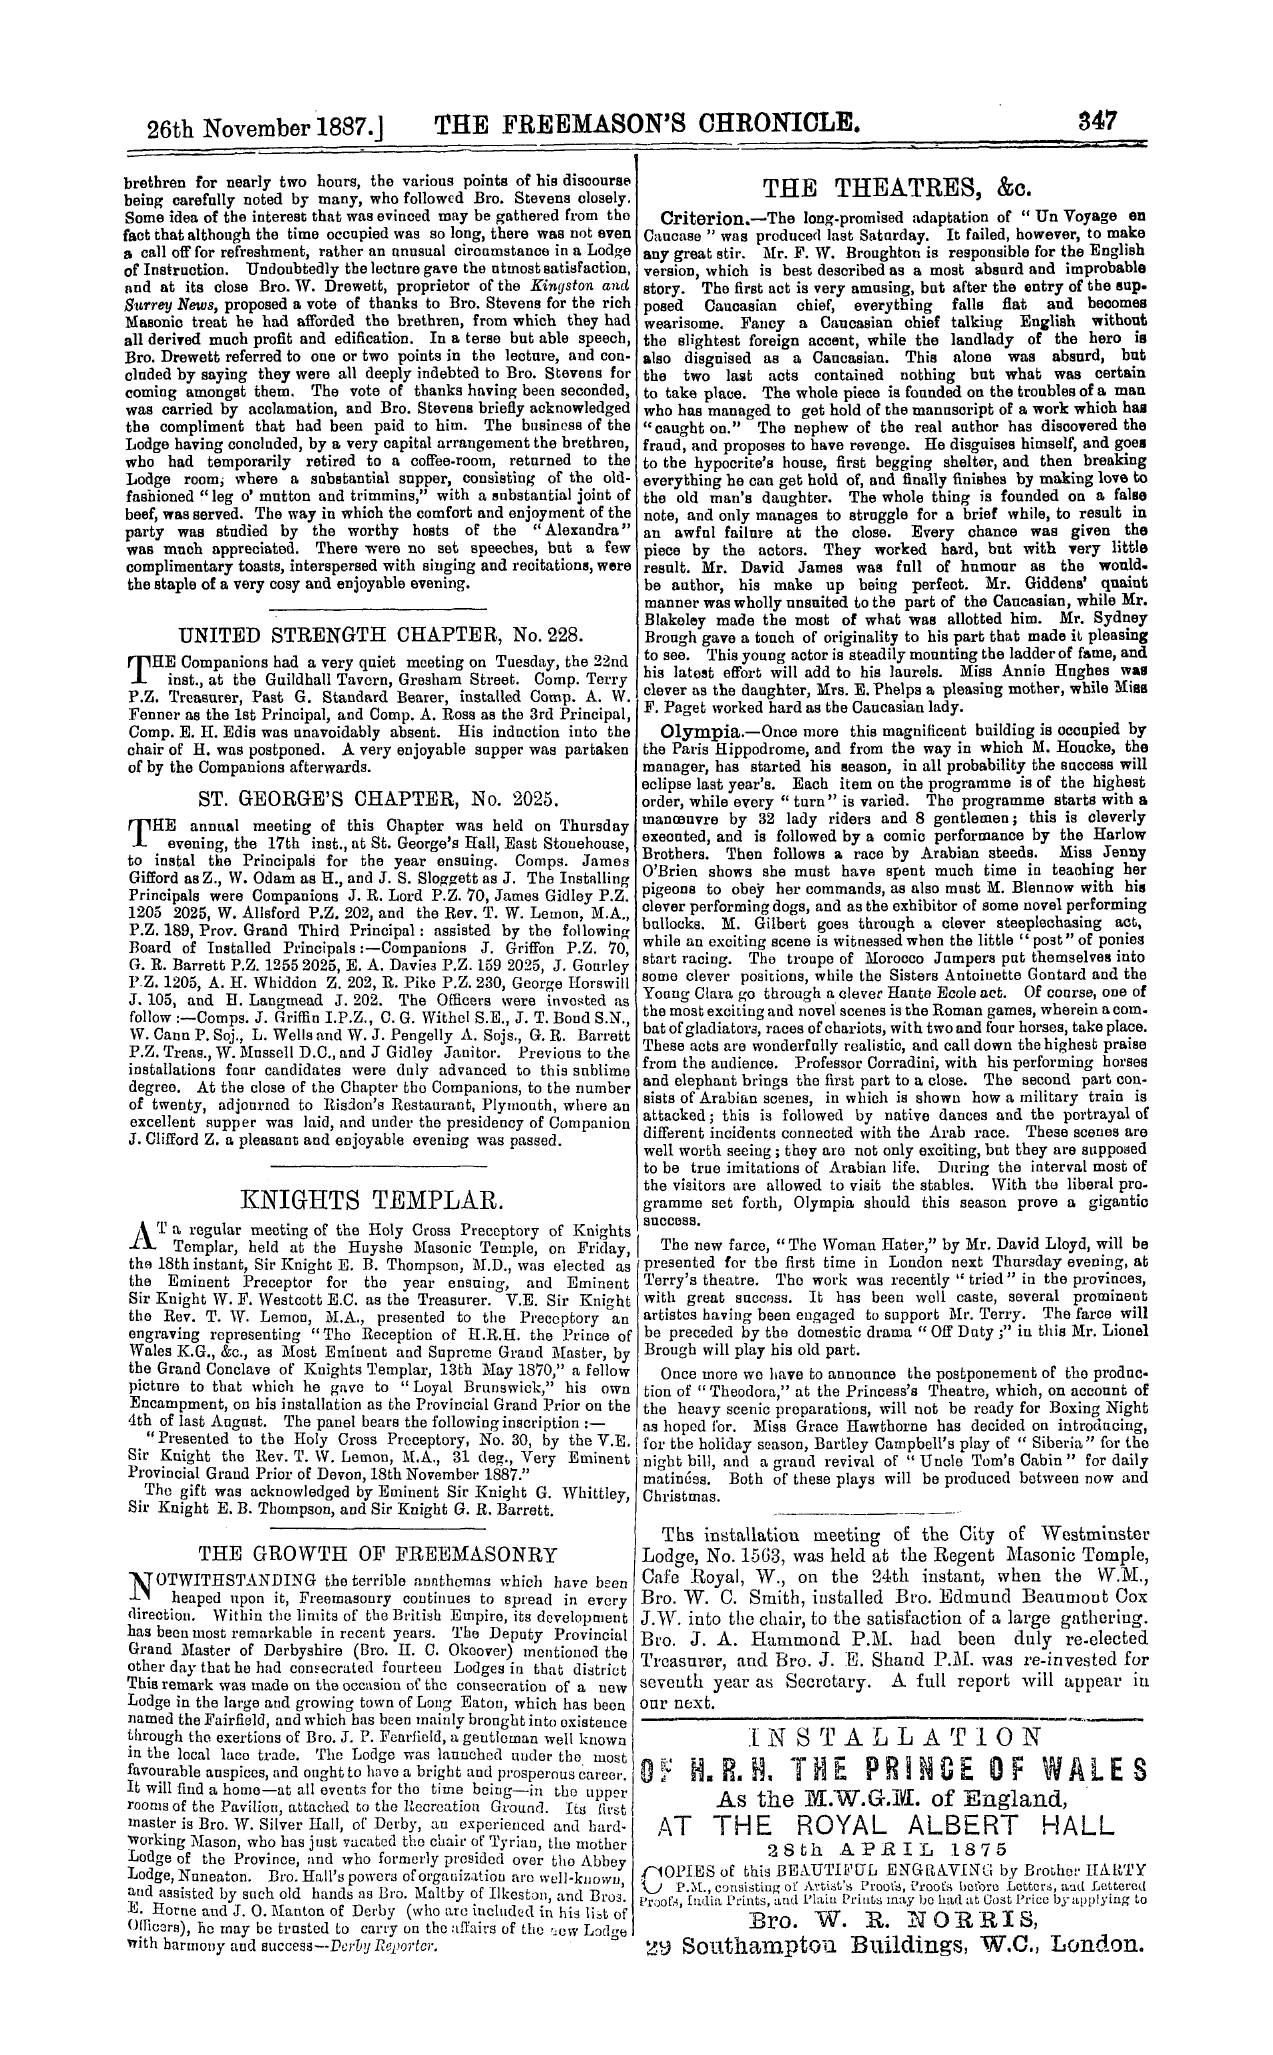 The Freemason's Chronicle: 1887-11-26: 11